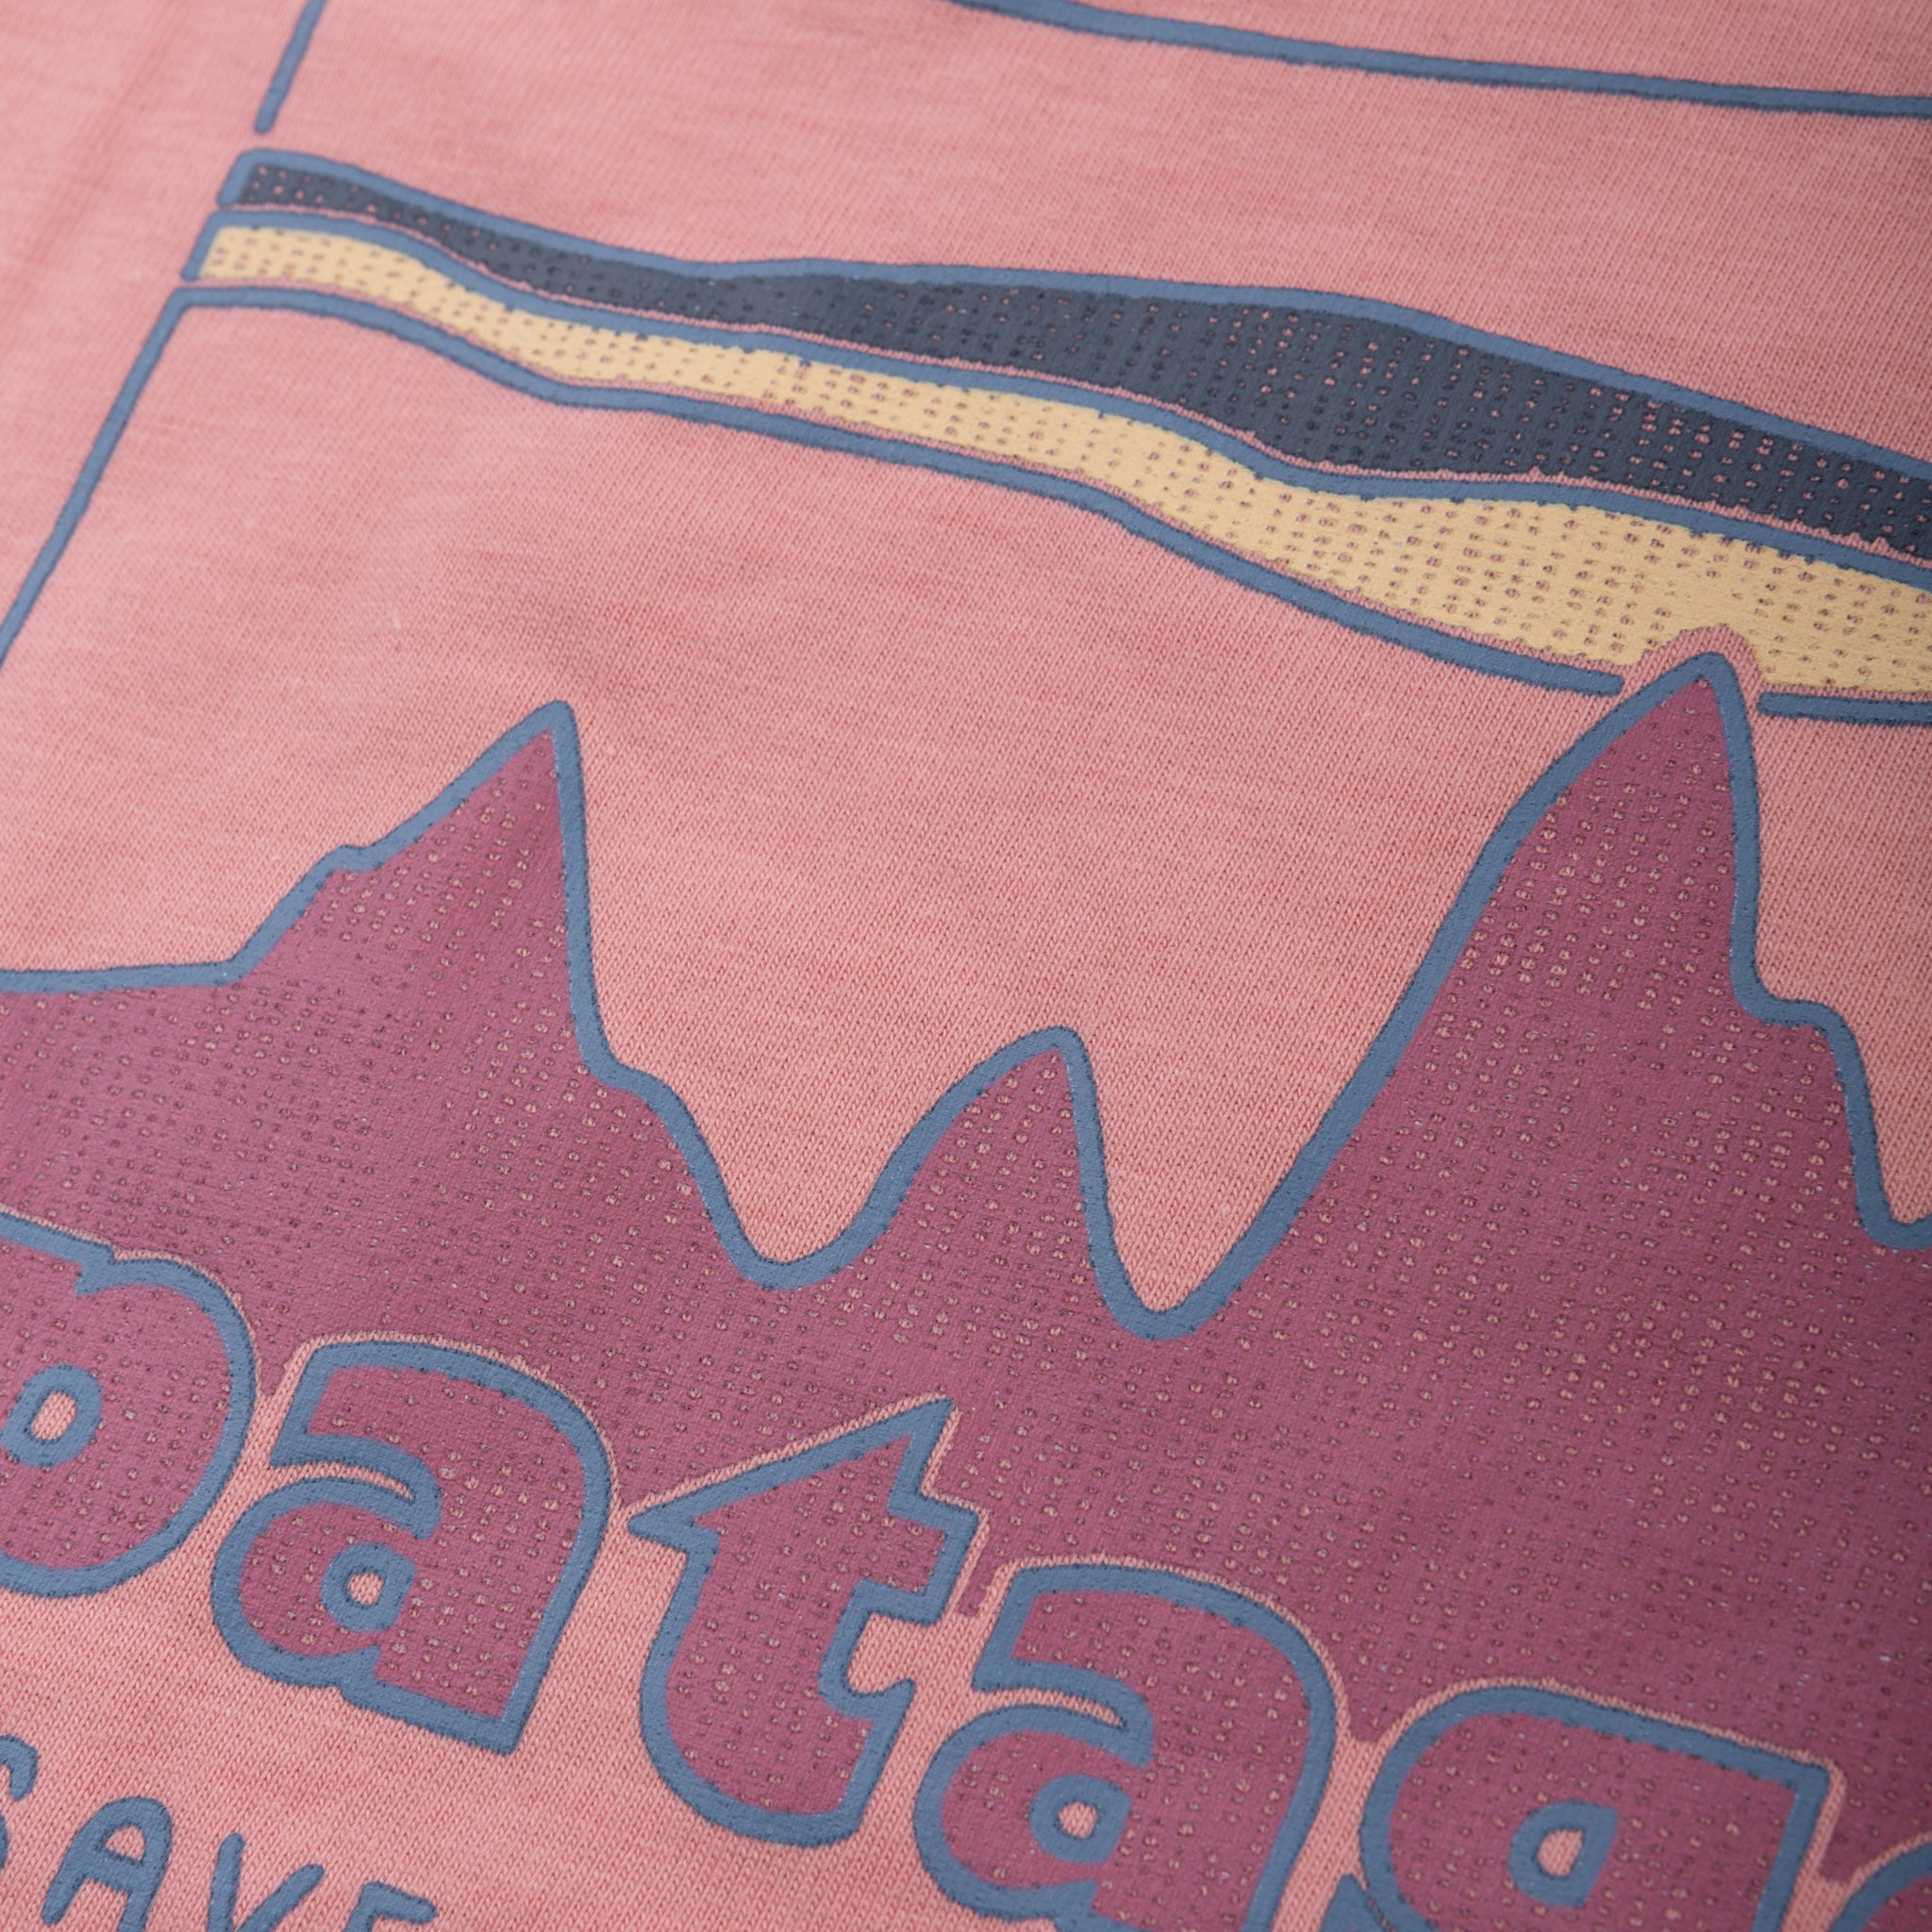 Patagonia Girls Long-Sleeved Regenerative Organic Certified Cotton Graphic T-Shirt